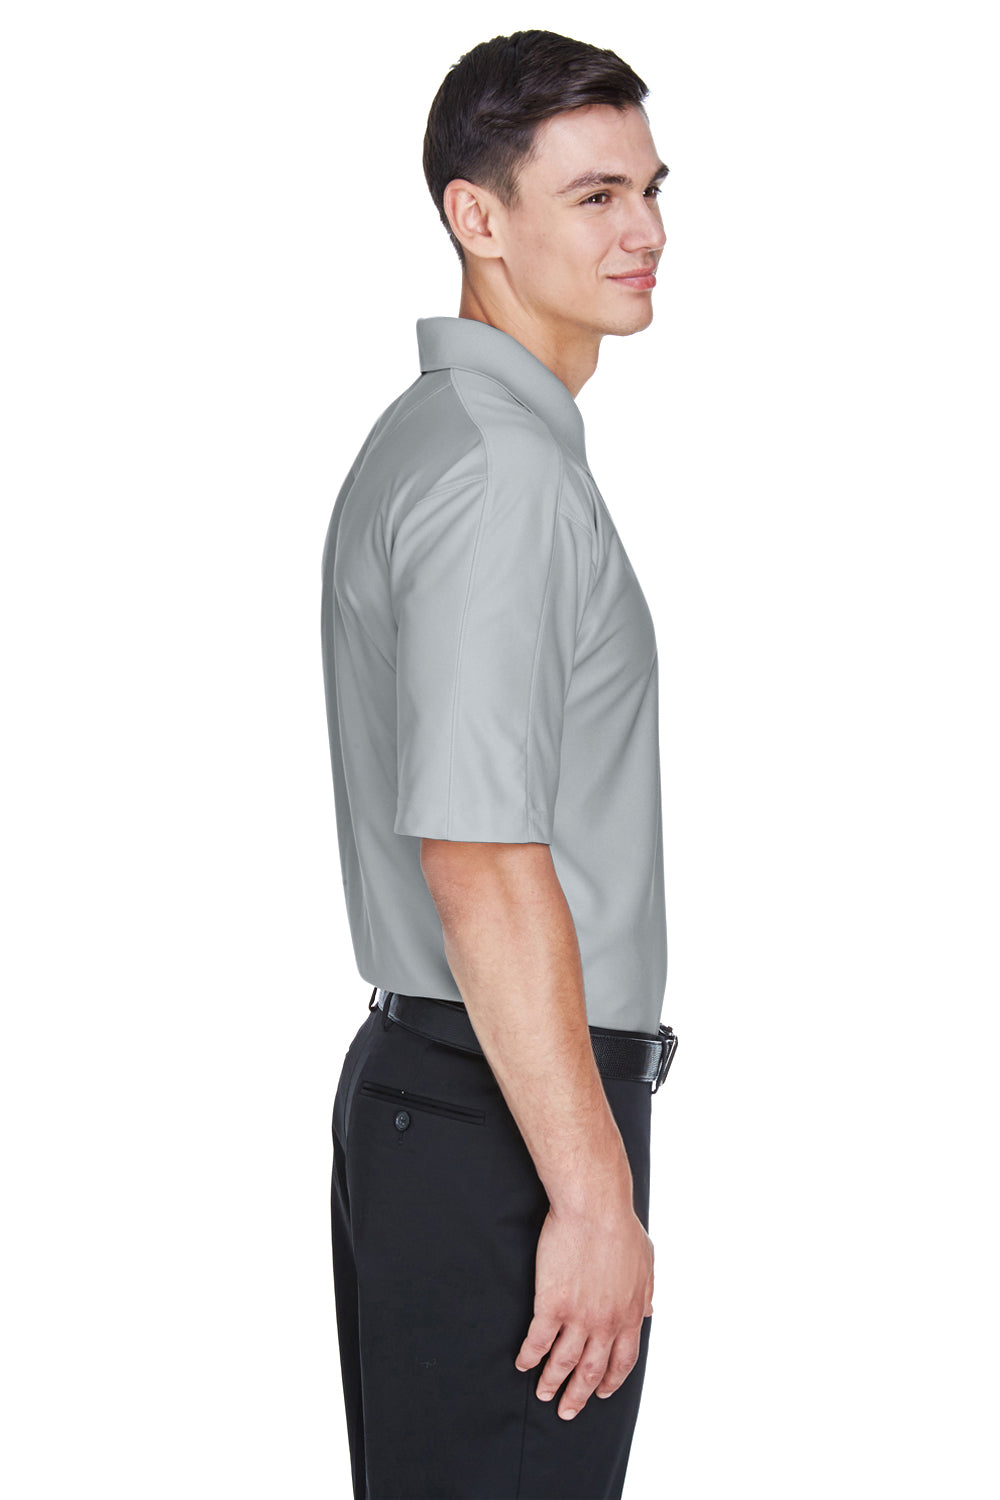 UltraClub 8415 Mens Cool & Dry Elite Performance Moisture Wicking Short Sleeve Polo Shirt Grey Side